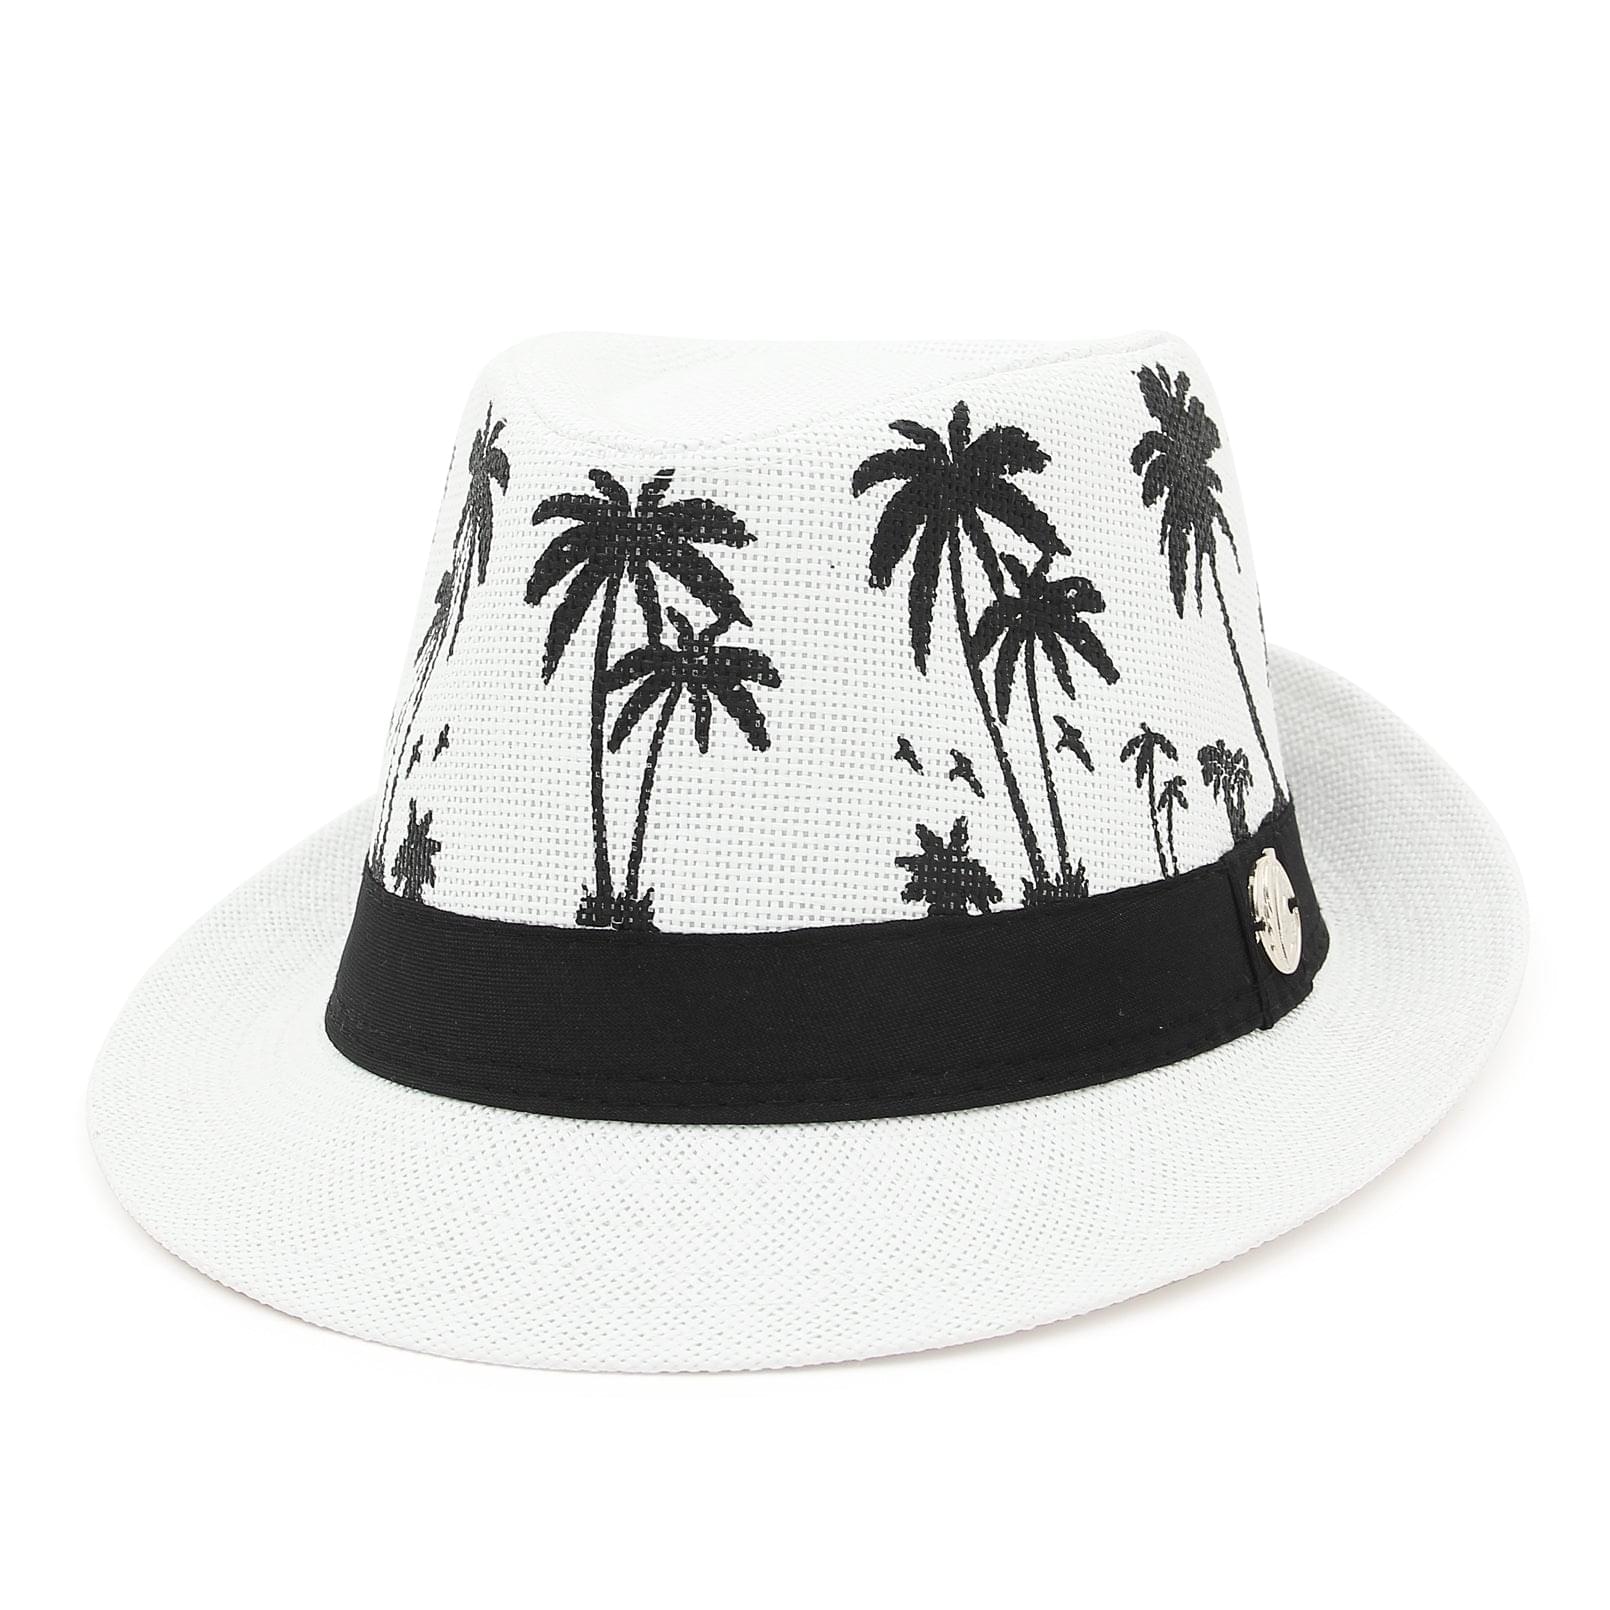 GEMVIE Straw Sun Hat for Women Men's Summer Panama Trilby Hat Tree Pattern Straw Jazz Sun Cap